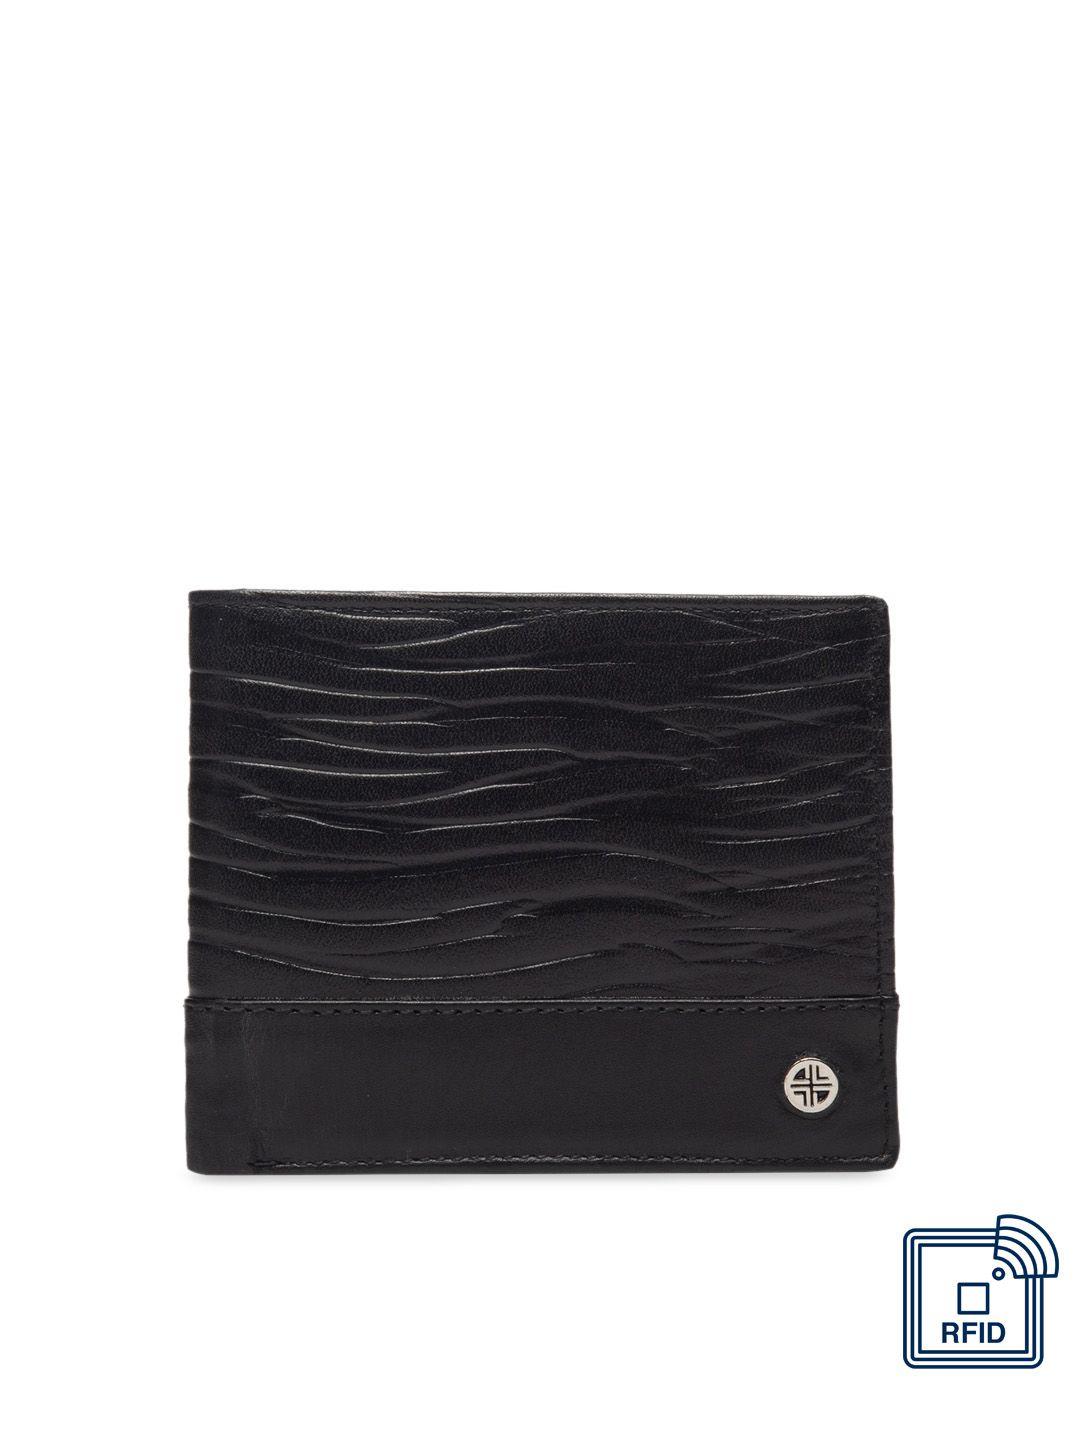 carlton london men black solid leather rfid two fold wallet